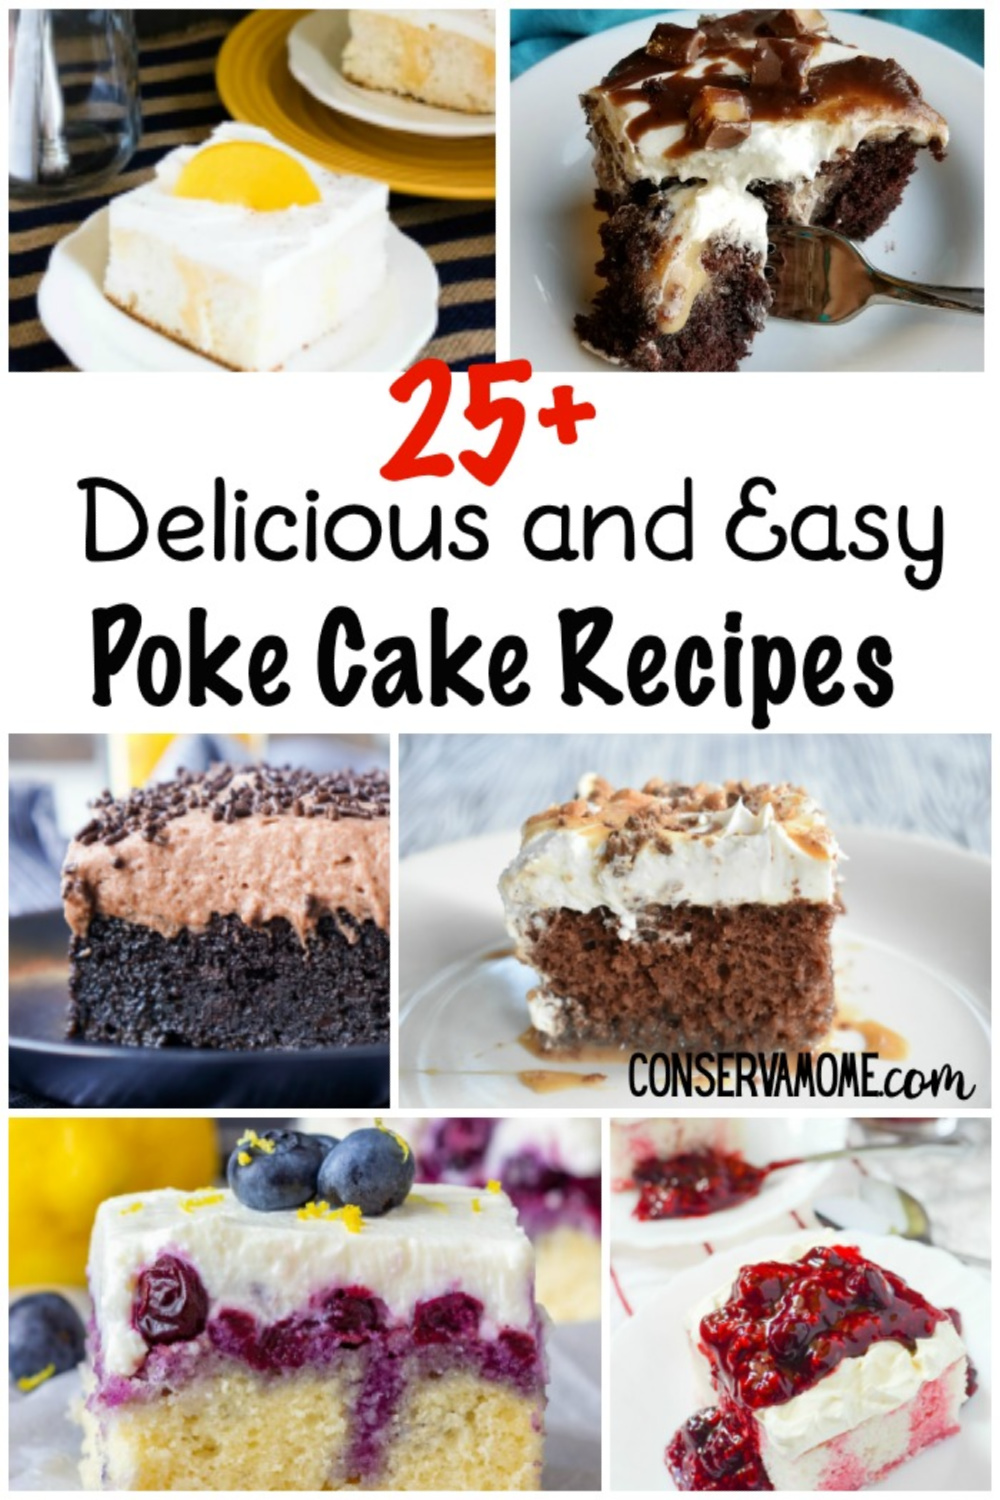 20 Easy Poke Cake Recipes You'll Love - Kindly Unspoken